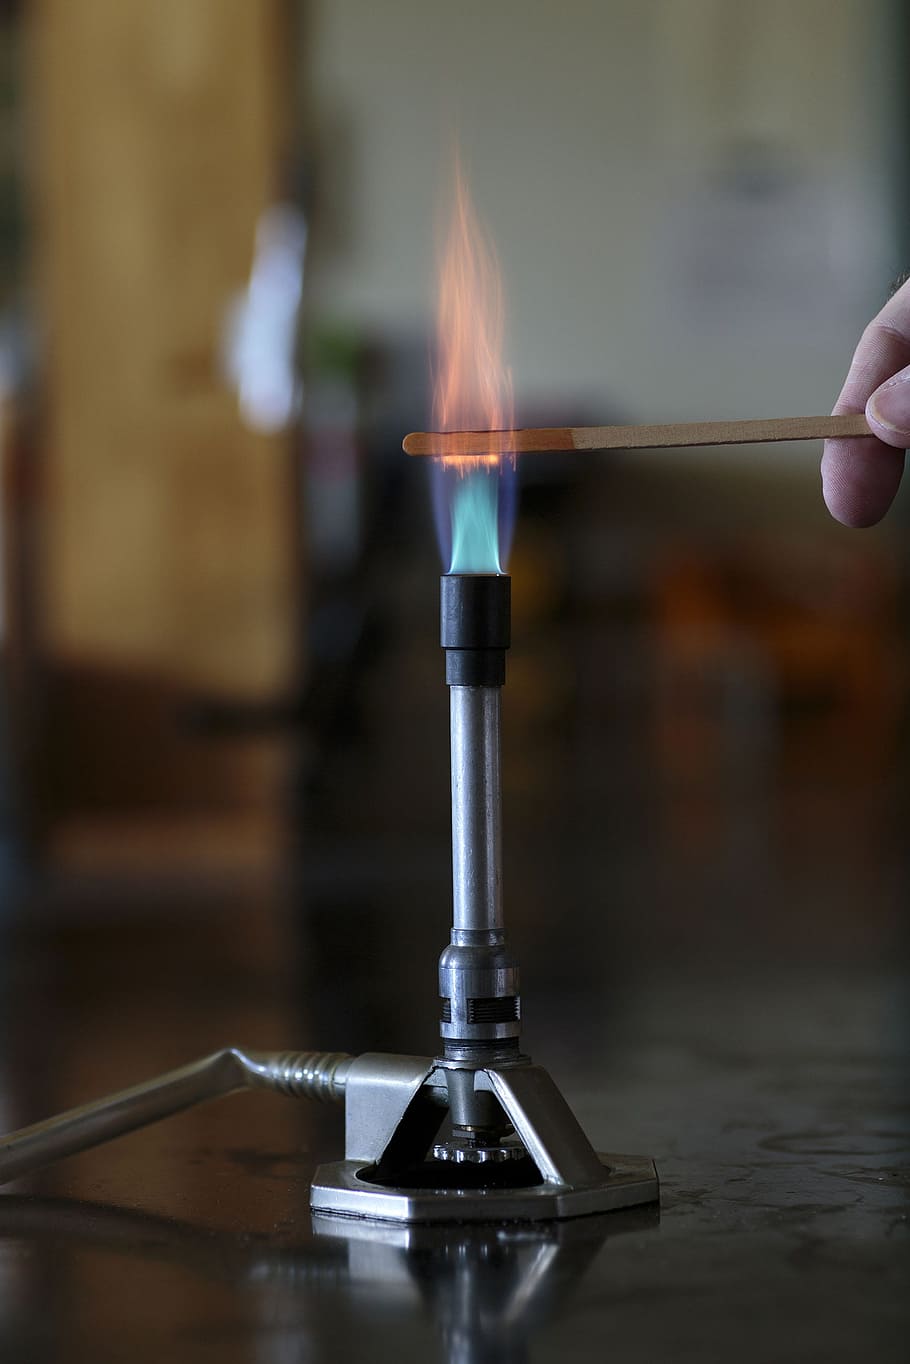 solusi kobalt, pembakaran, kayu, belat, bunsen burner flame, flame., kimia, nyala api, logam, garam